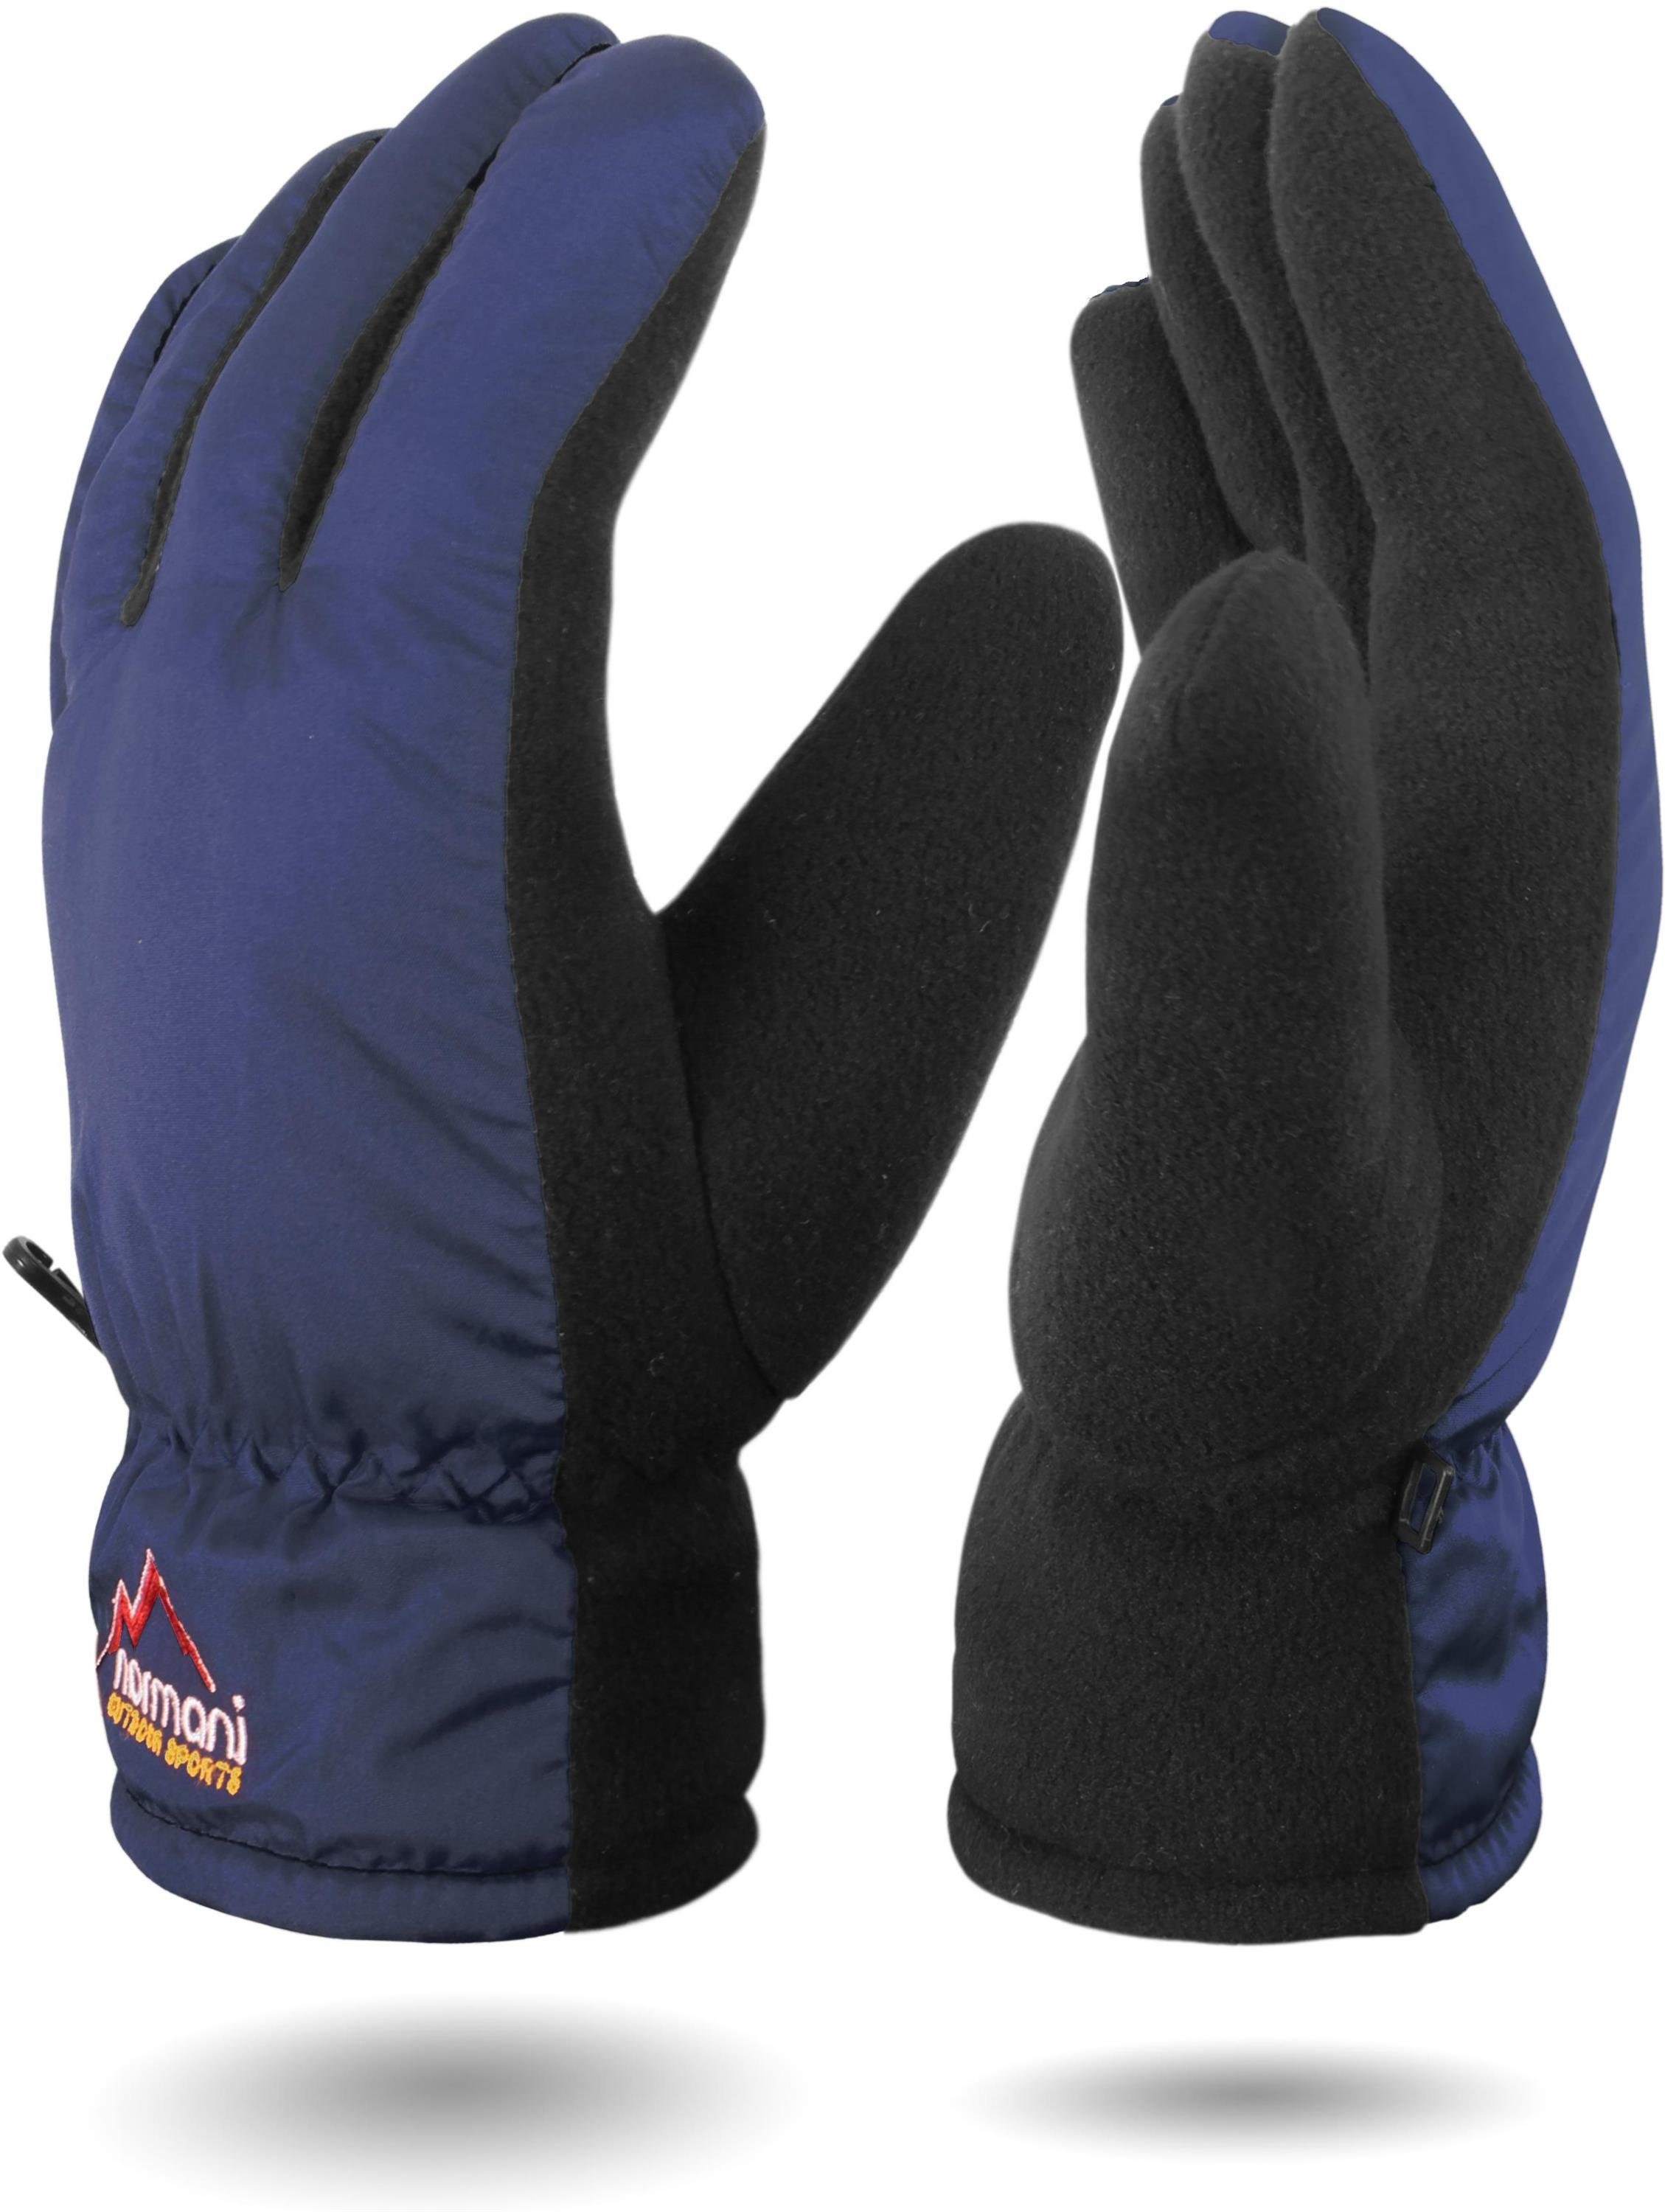 normani Skihandschuhe Herren Handschuhe TOG-Wert 9.8 Thermohandschuhe Innenfutter mit bis -10°C Skihandschuhe - Winterhandschuhe Navy Fleece Lupus